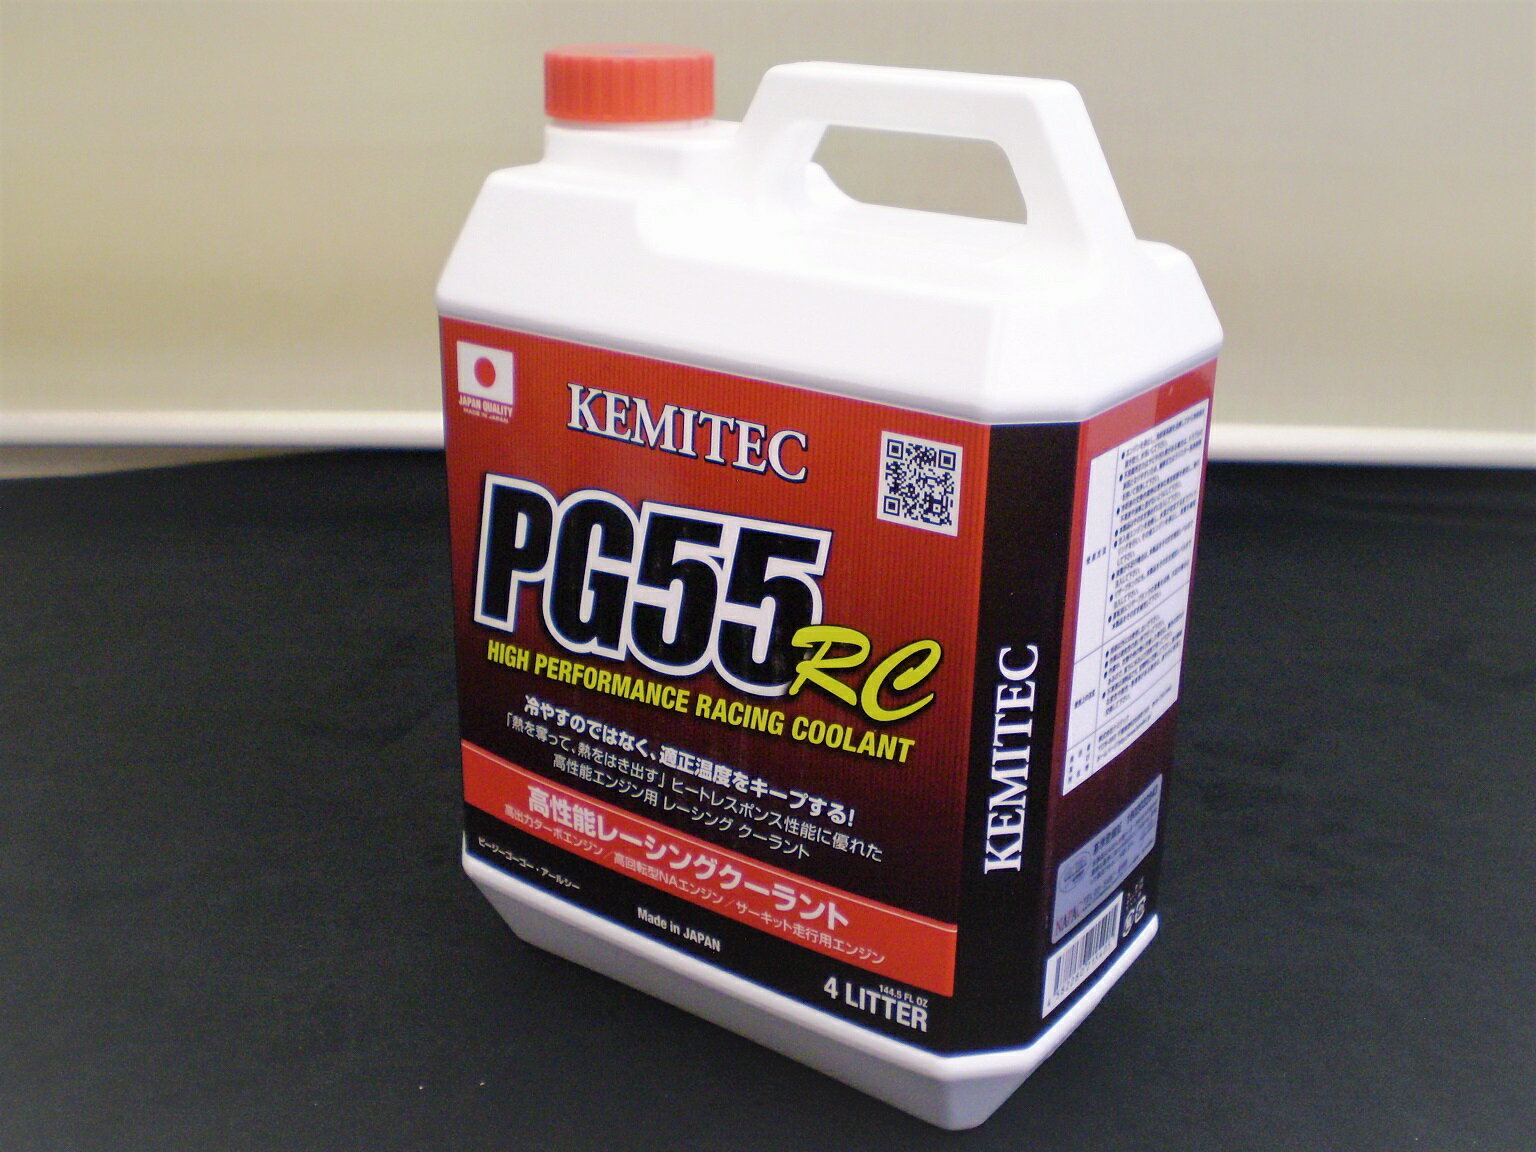 KEMITEC　ケミテック 高性能レーシング クーラントPG55 RC 【 4L 】 【HIGH PERFORMANCE RACING COOLANT】FH122